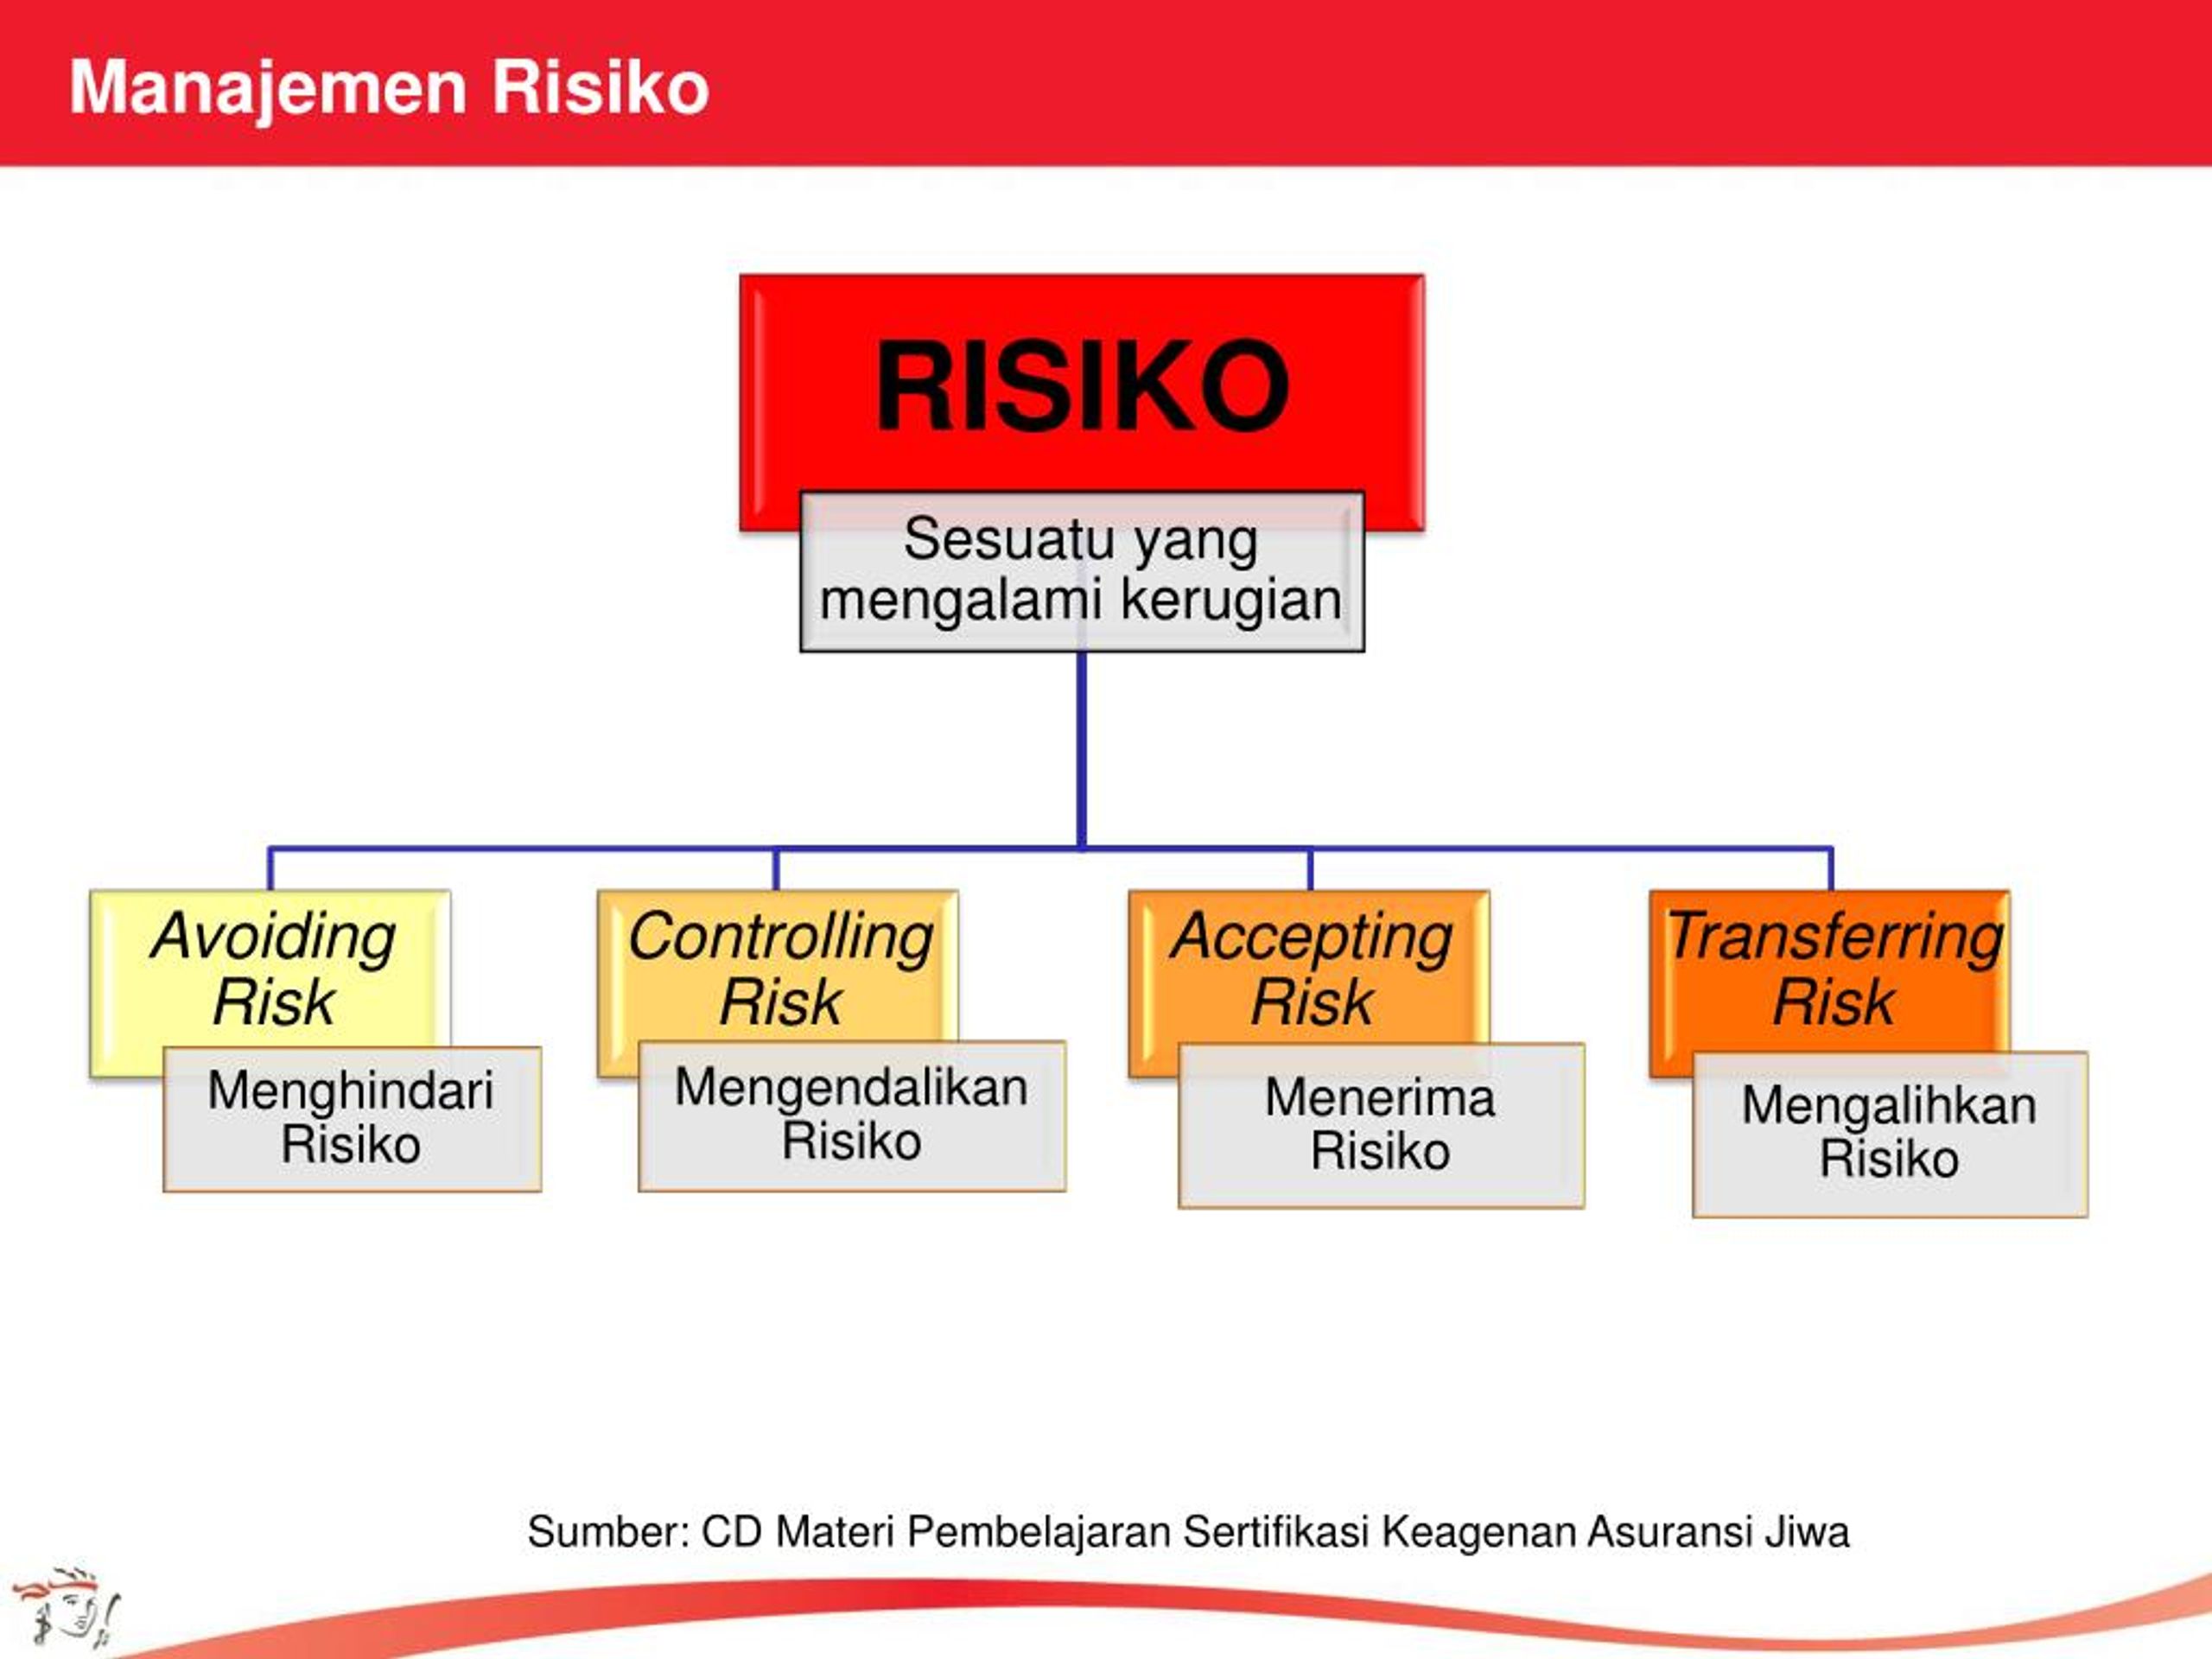 Risk avoidance. Risk controlling